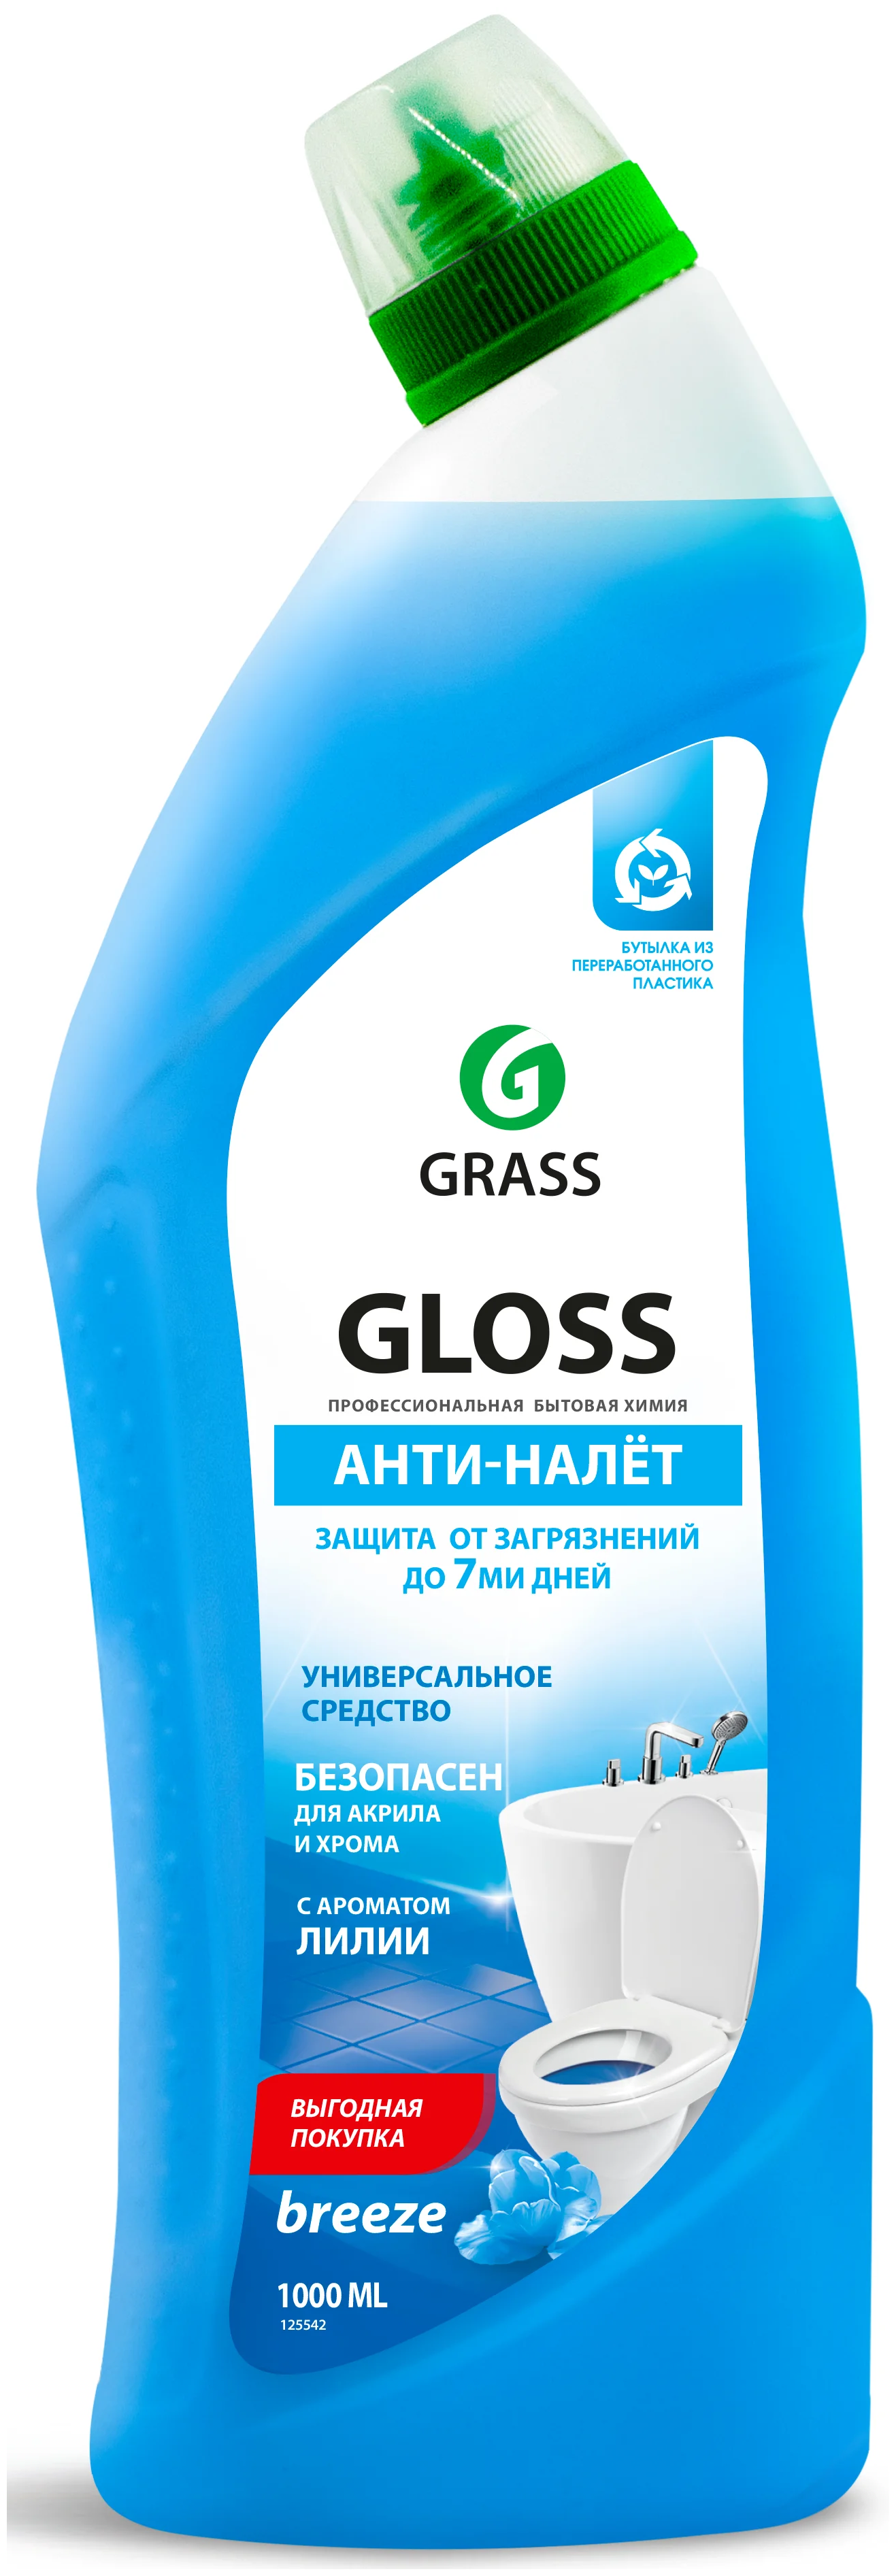 Grass Чистящий гель для ванны и туалета Gloss breeze, 1 л.